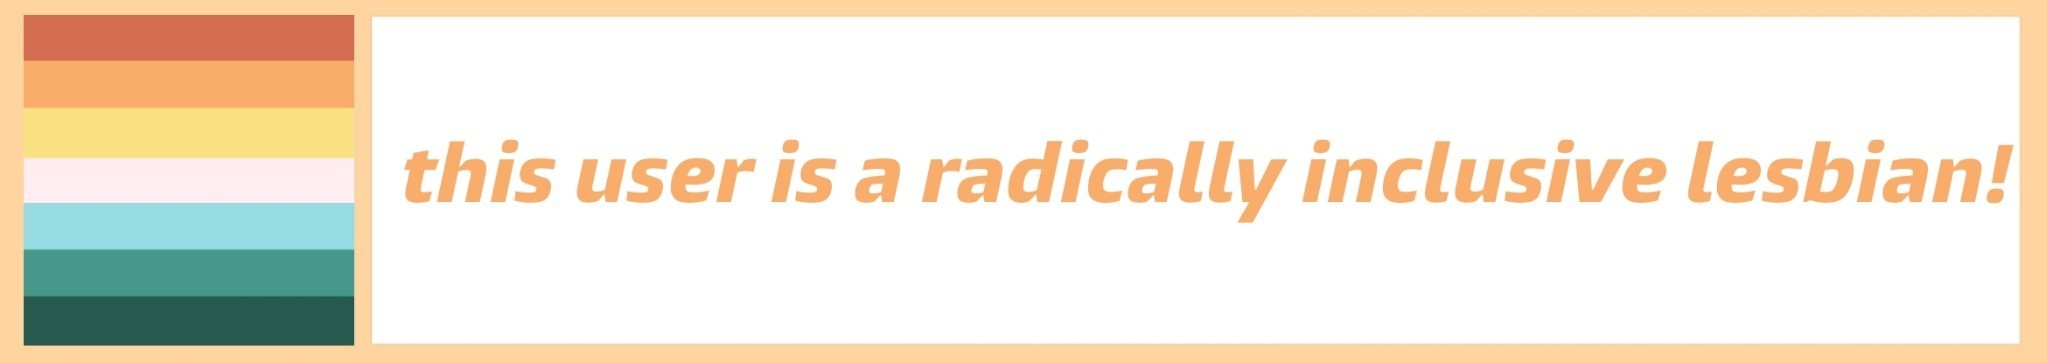 radical inclusion!